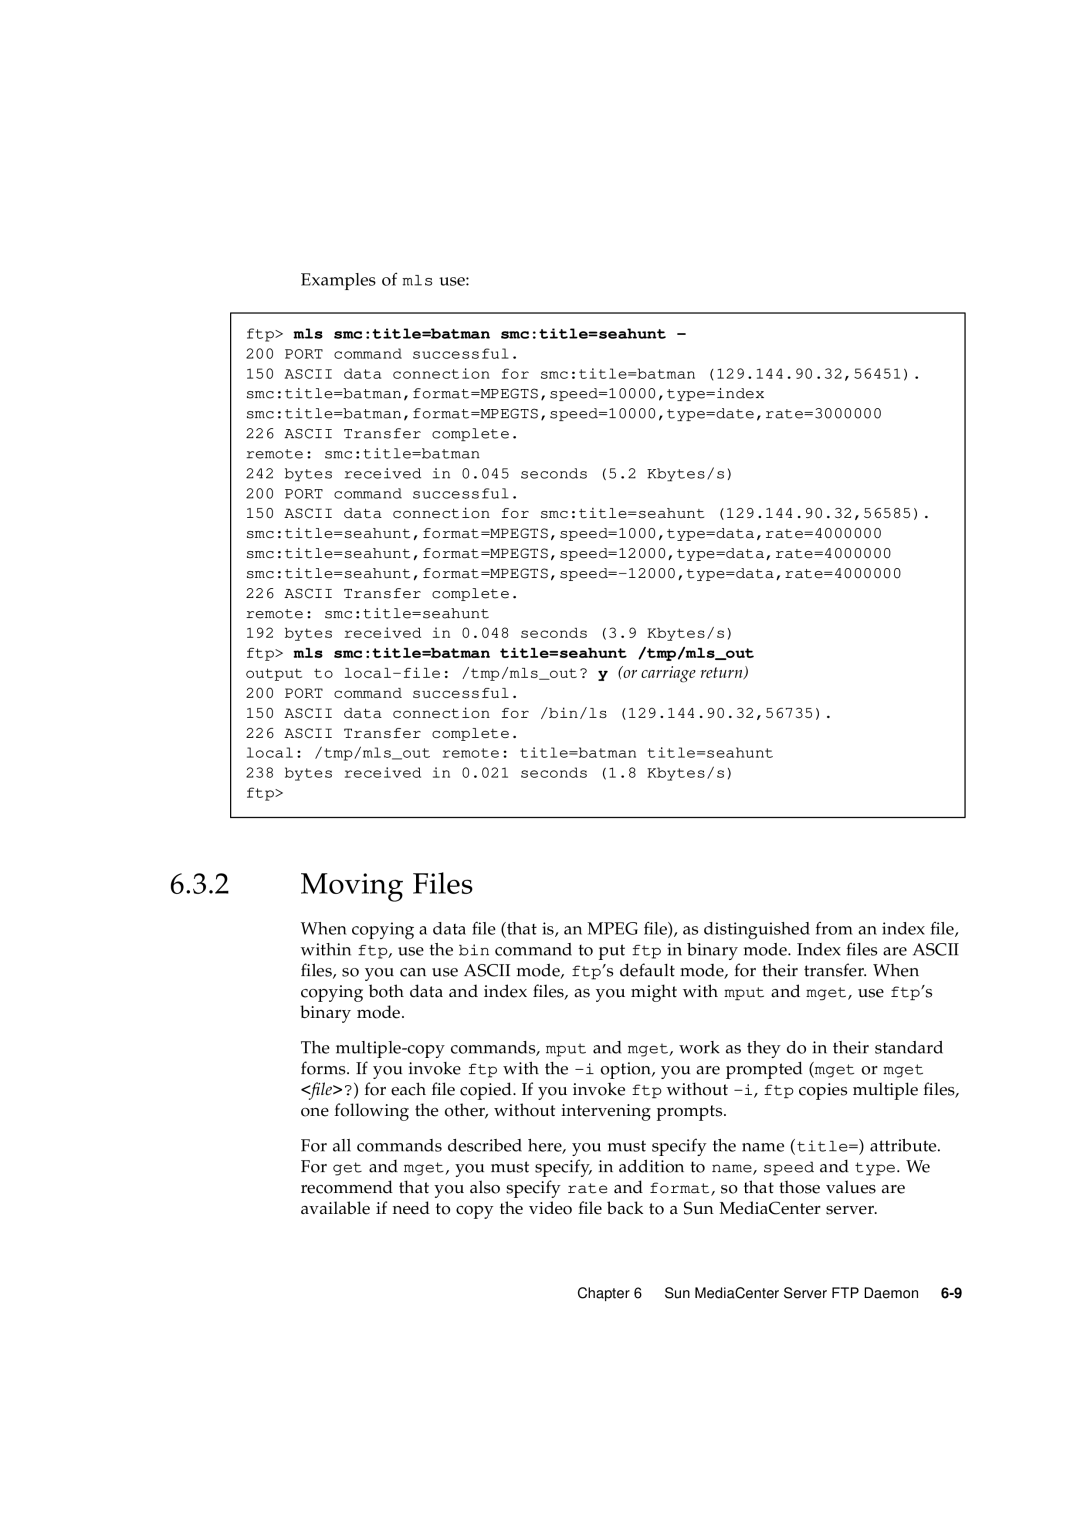 Sun Microsystems 2.1 manual Moving Files 